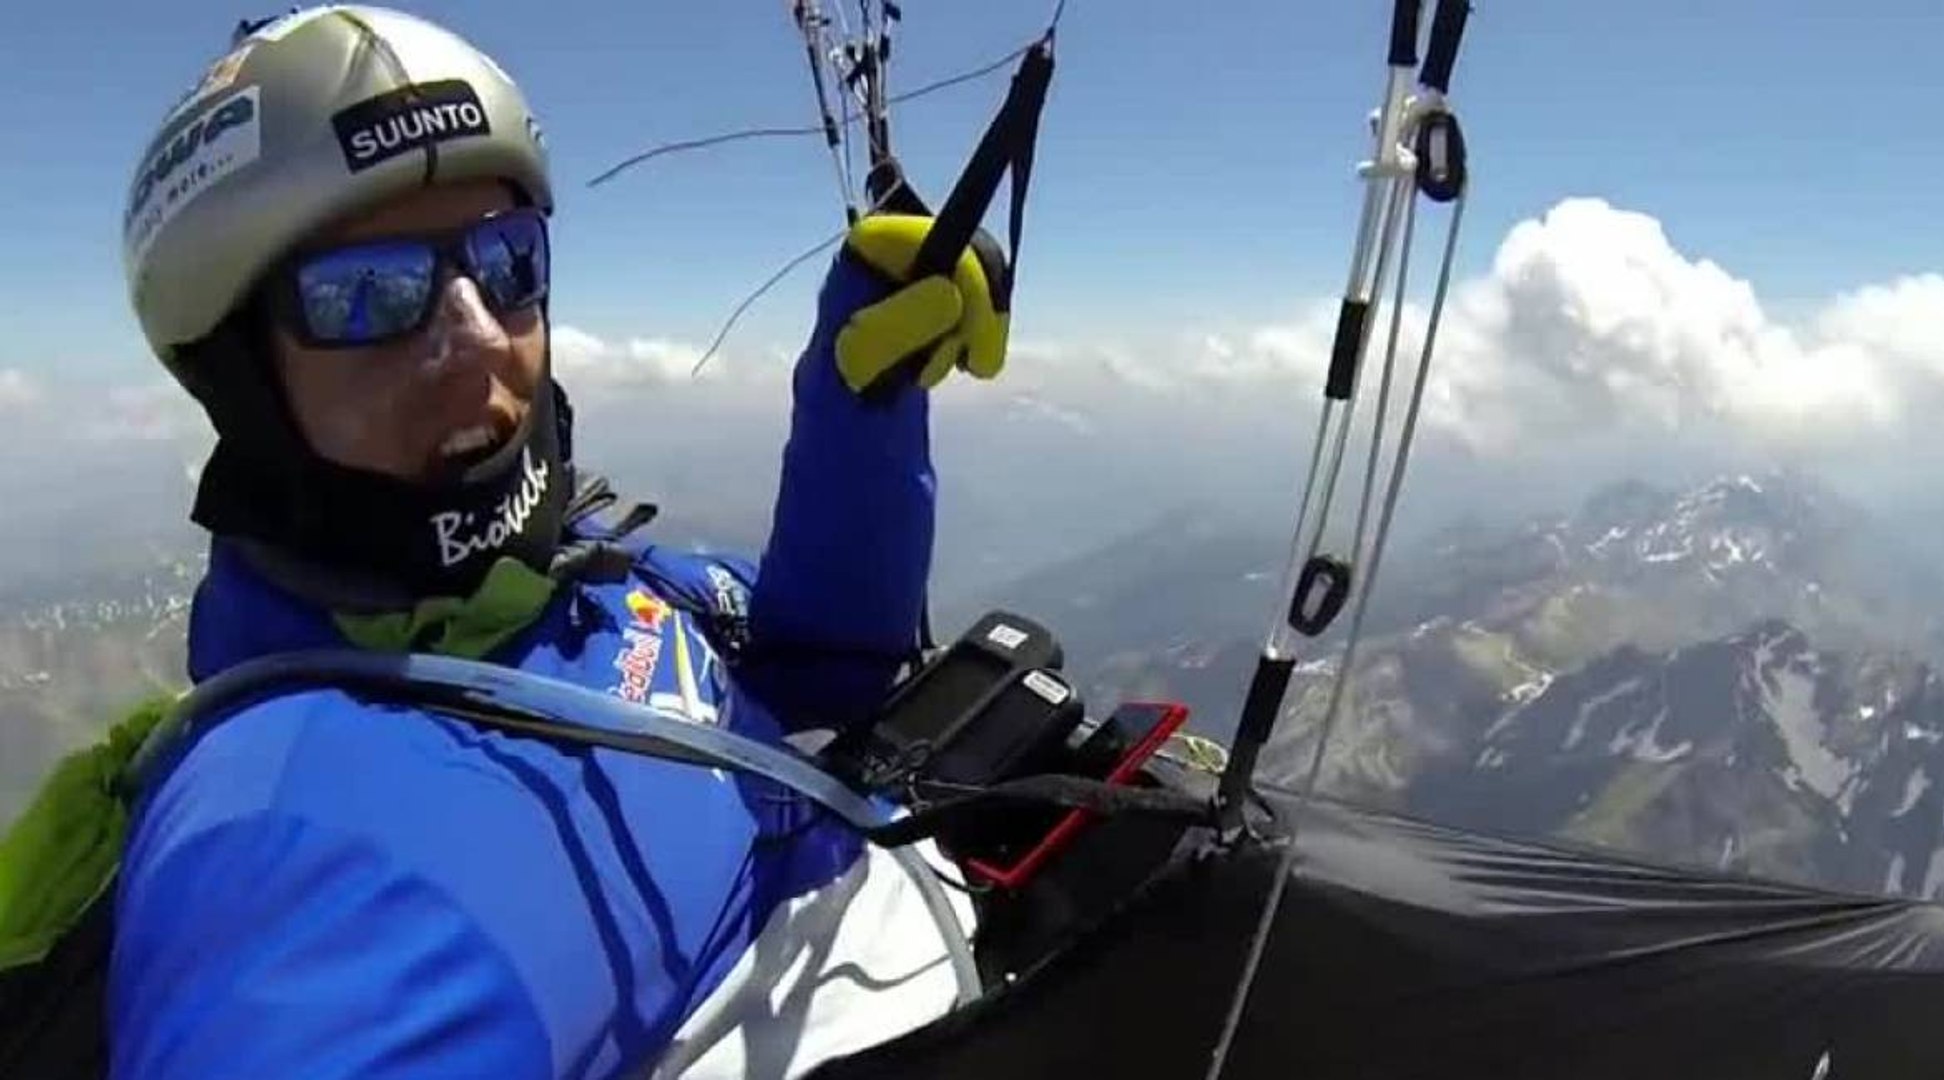 Le Red Bull X Alps en caméra embarquée - Vidéo Dailymotion